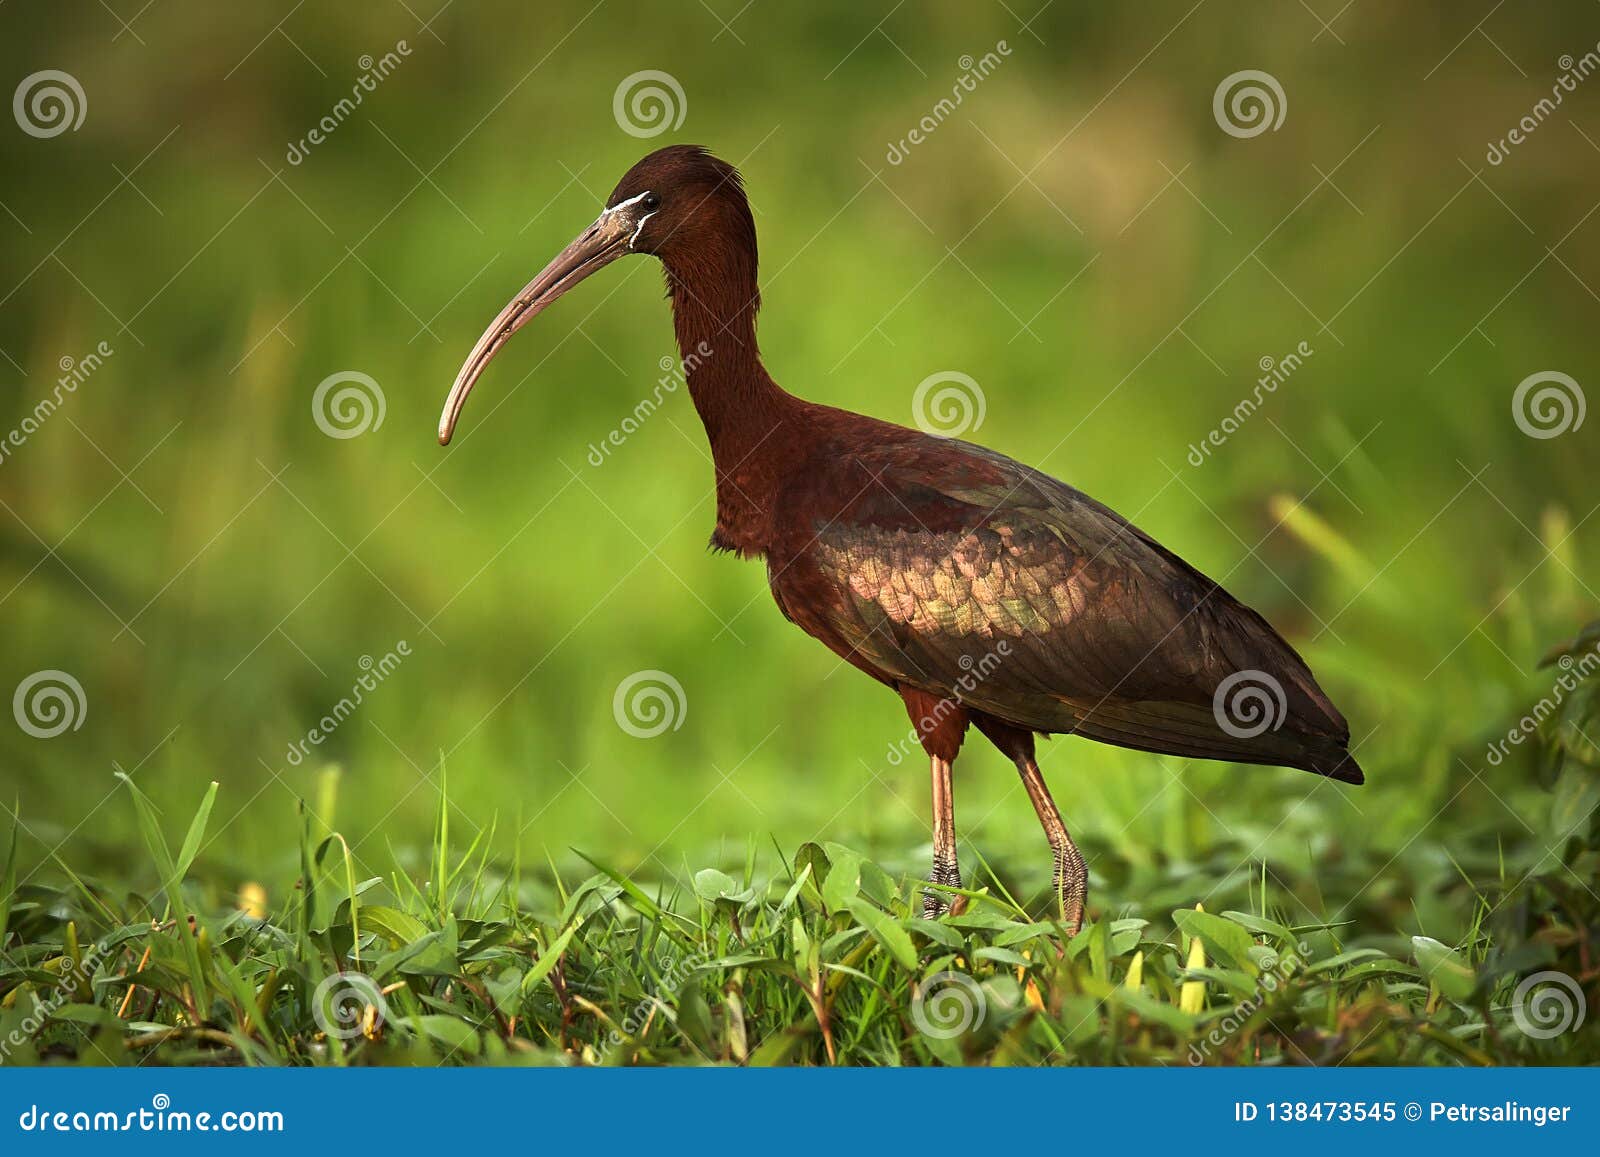 glossy ibis plegado falcinellus in beautiful light. bird in natural habitat. wildlife scene from danube delta